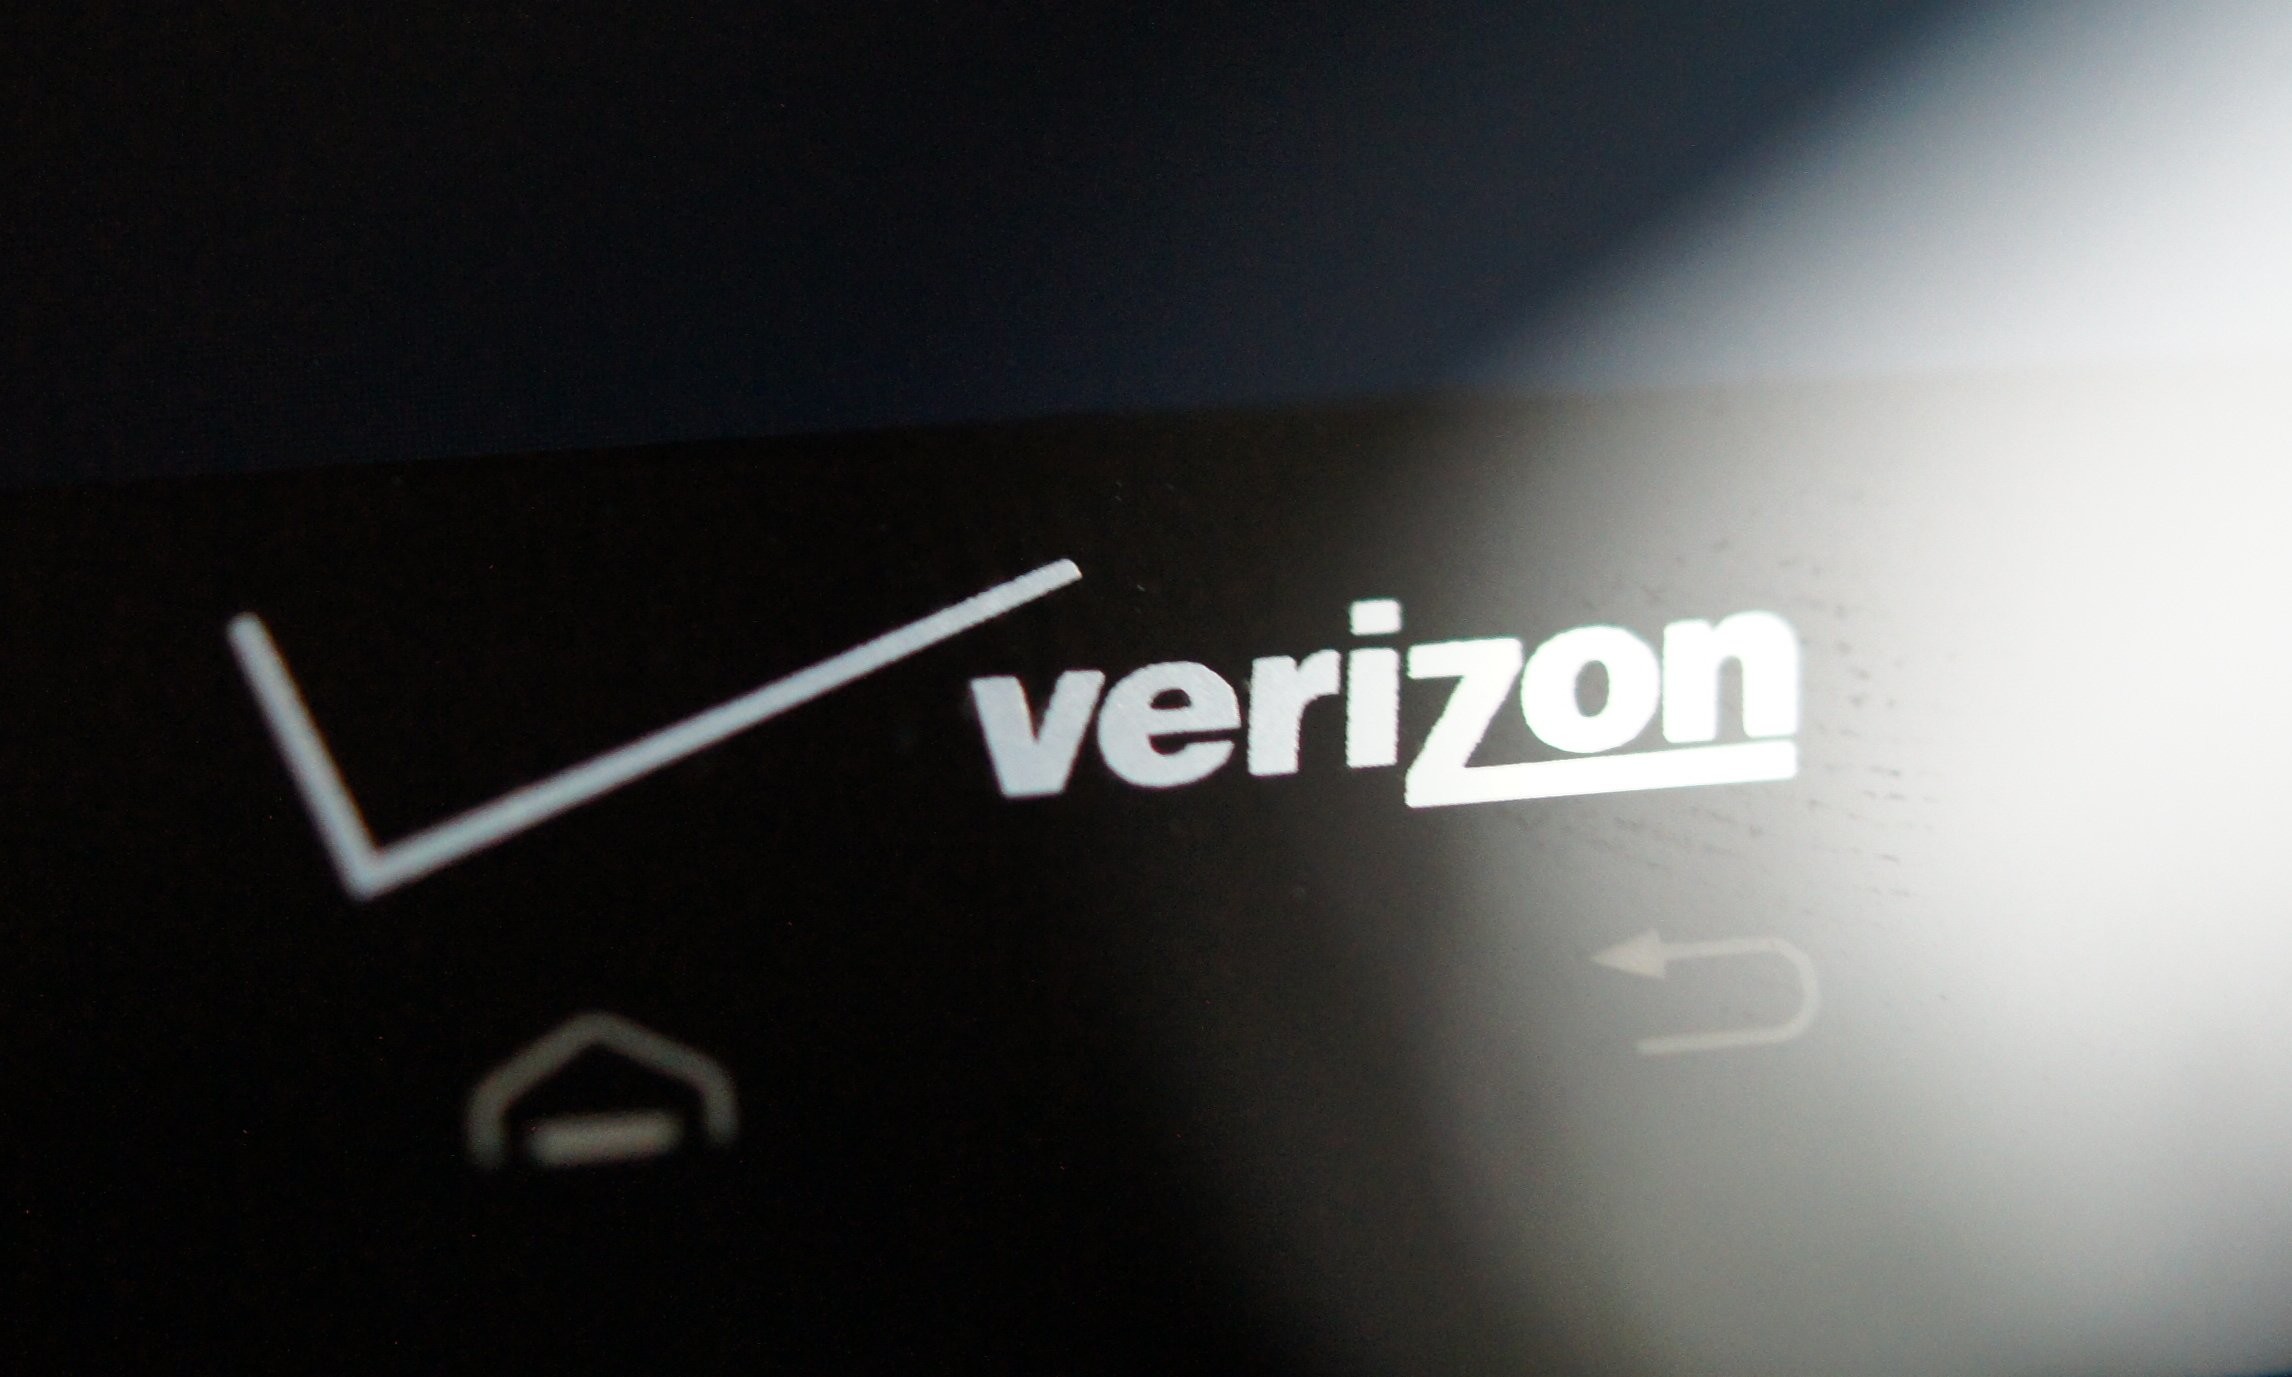 2292x1377 LG VS870 Could Be Verizon's Escape AndroidGuys